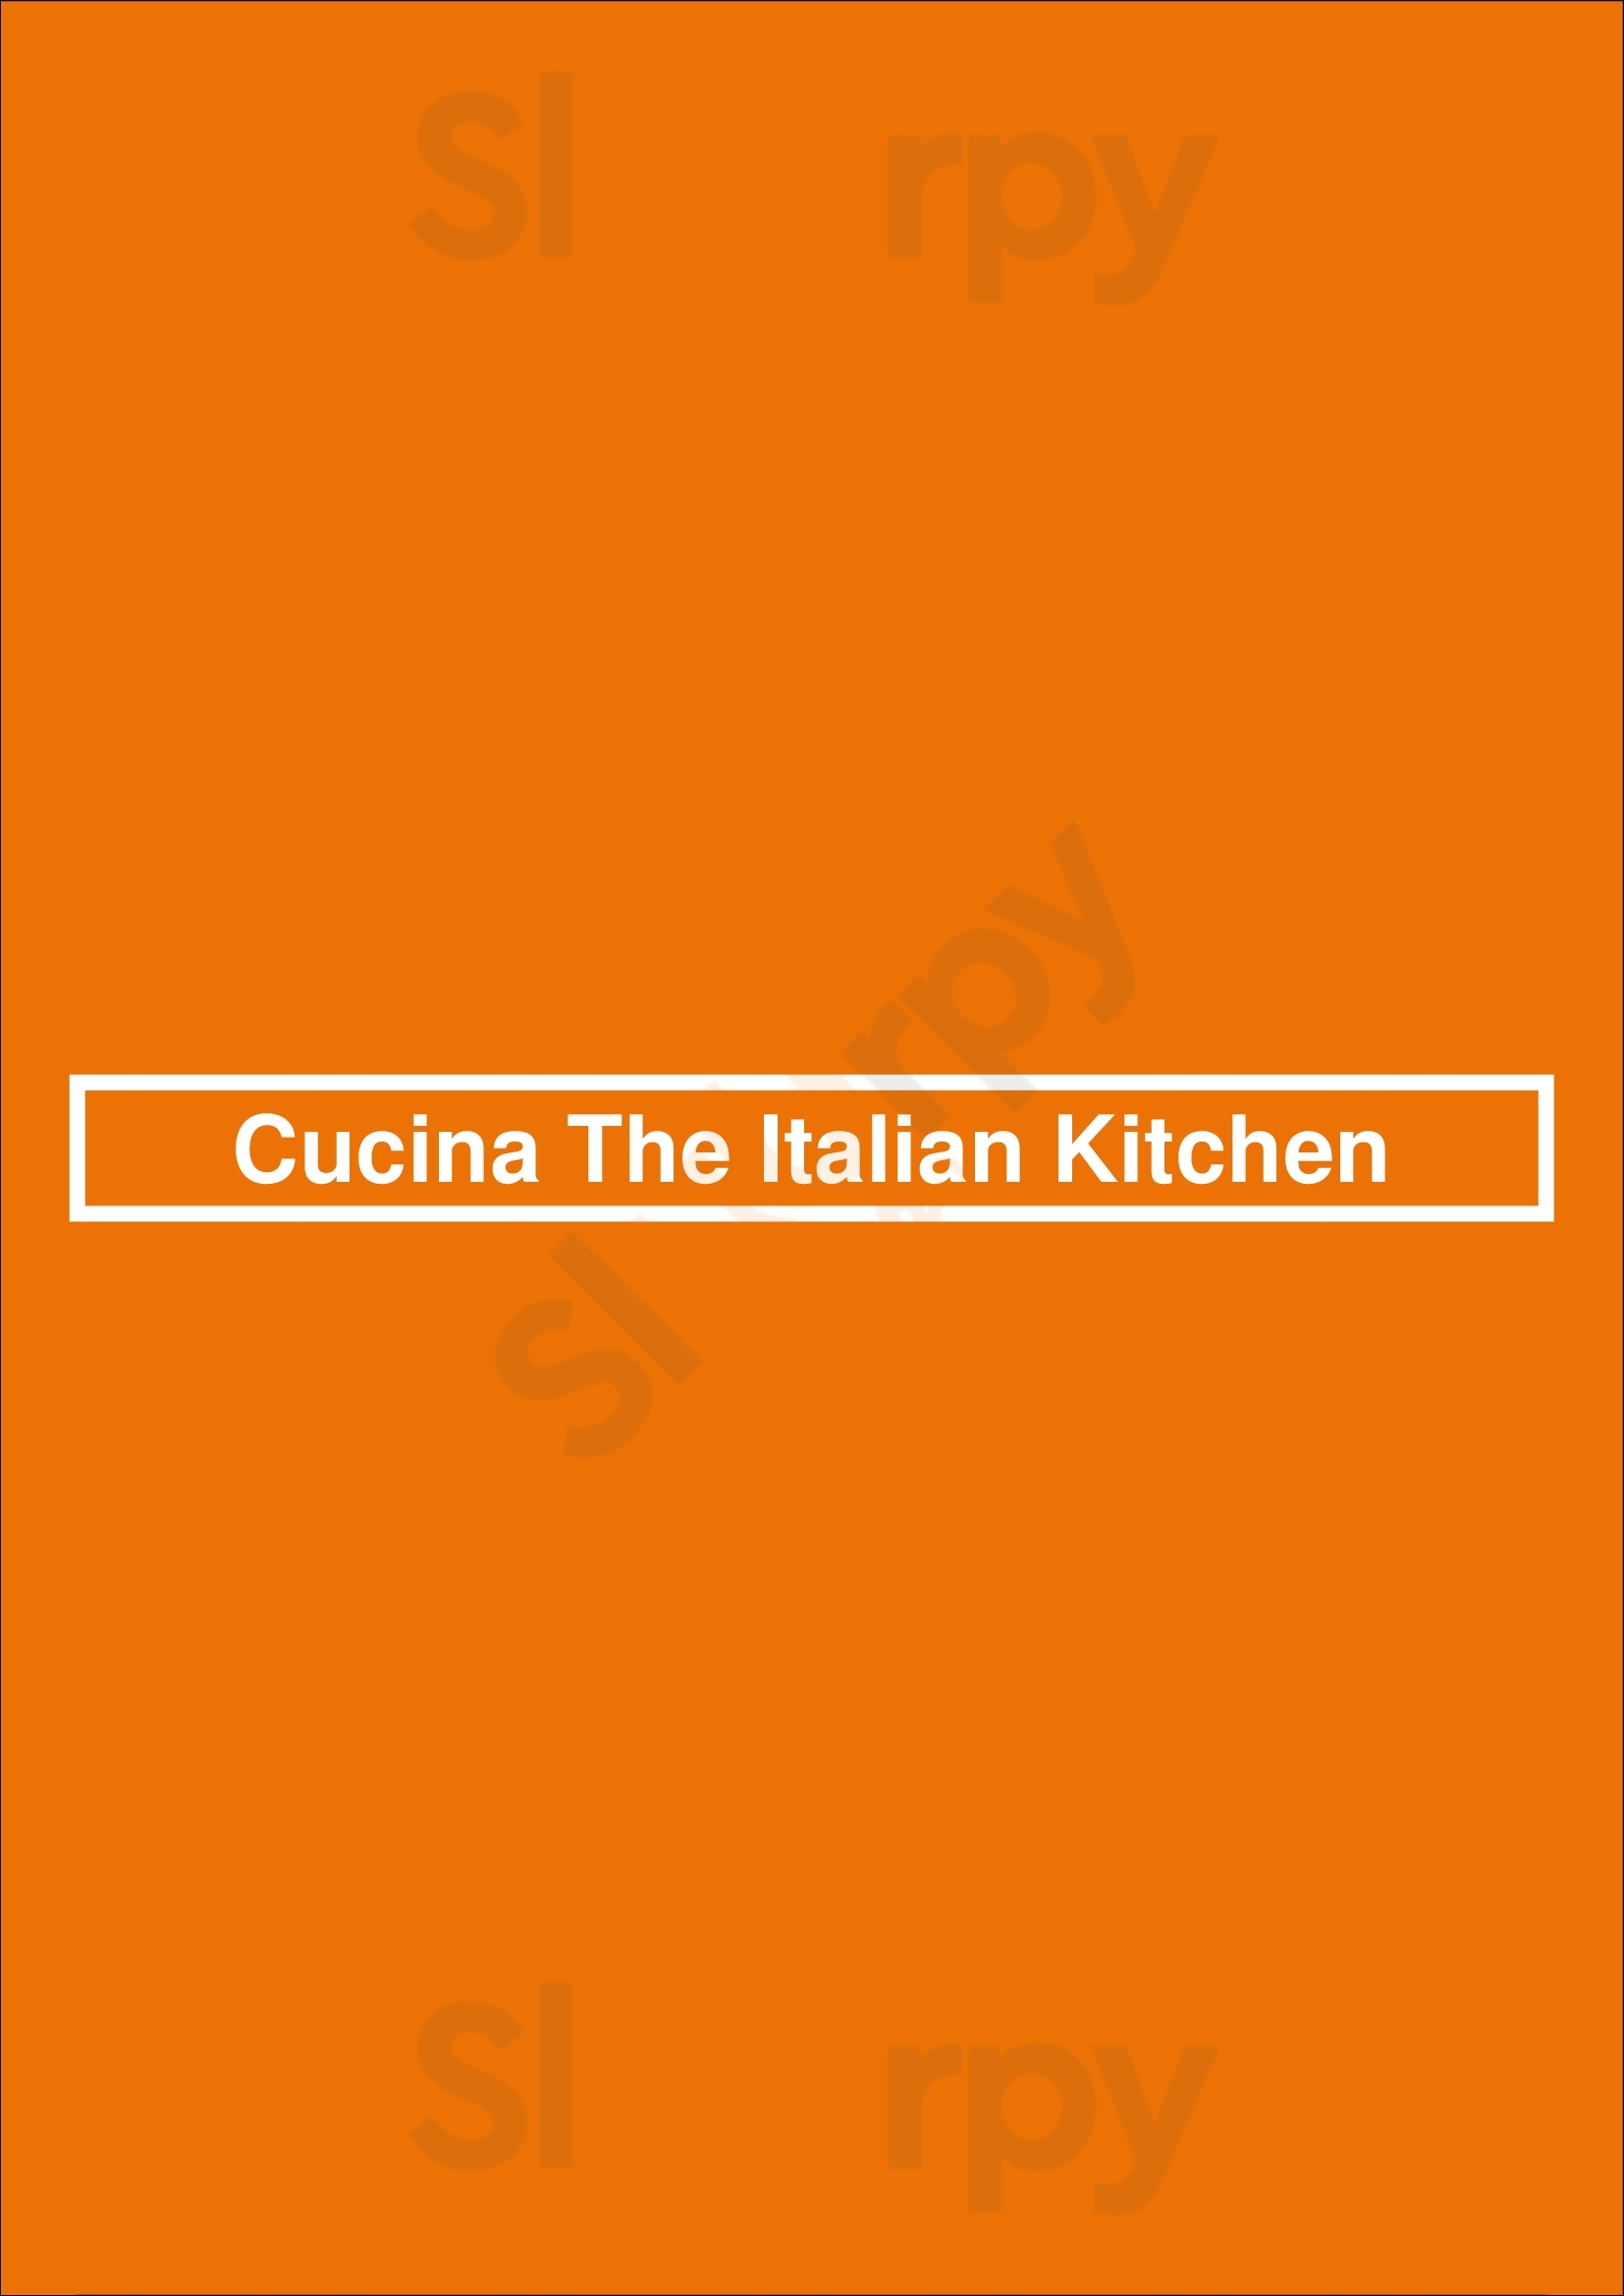 Cucina The Italian Kitchen Bucharest Menu - 1